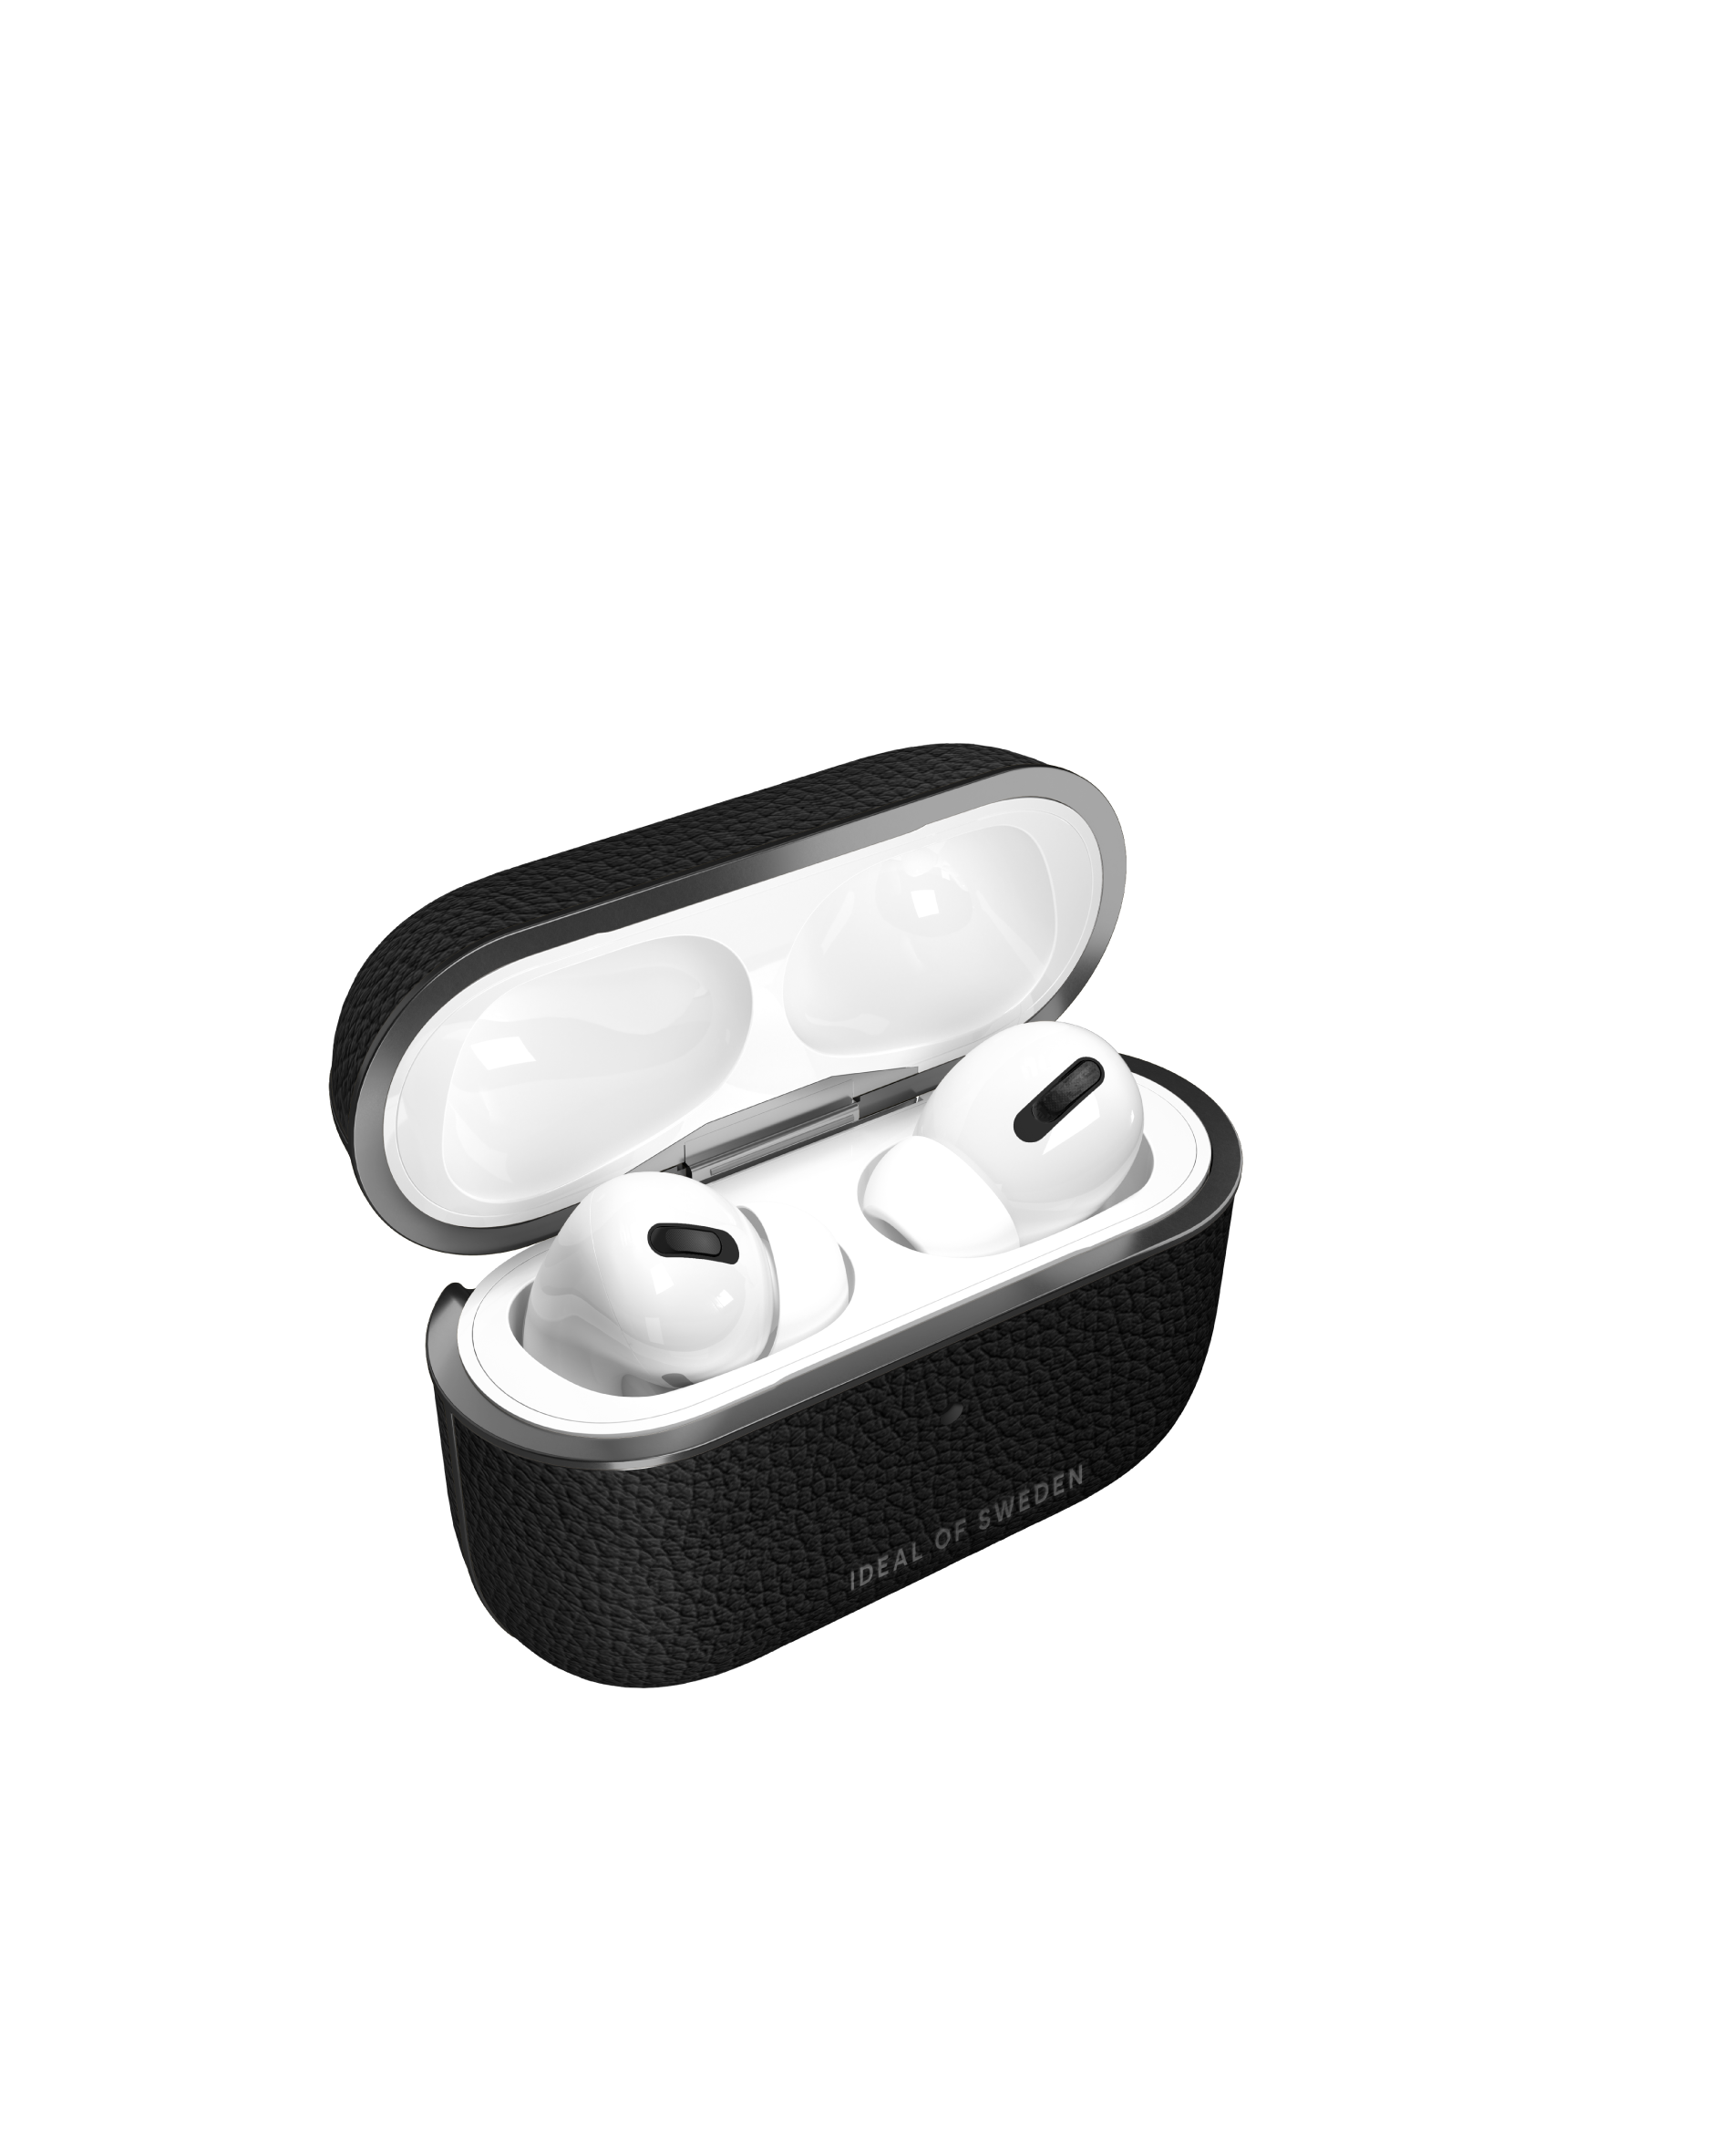 IDEAL OF für: Apple Schutzhülle Black Onyx IDAPCAW21-PRO-362 Khaki passend SWEDEN